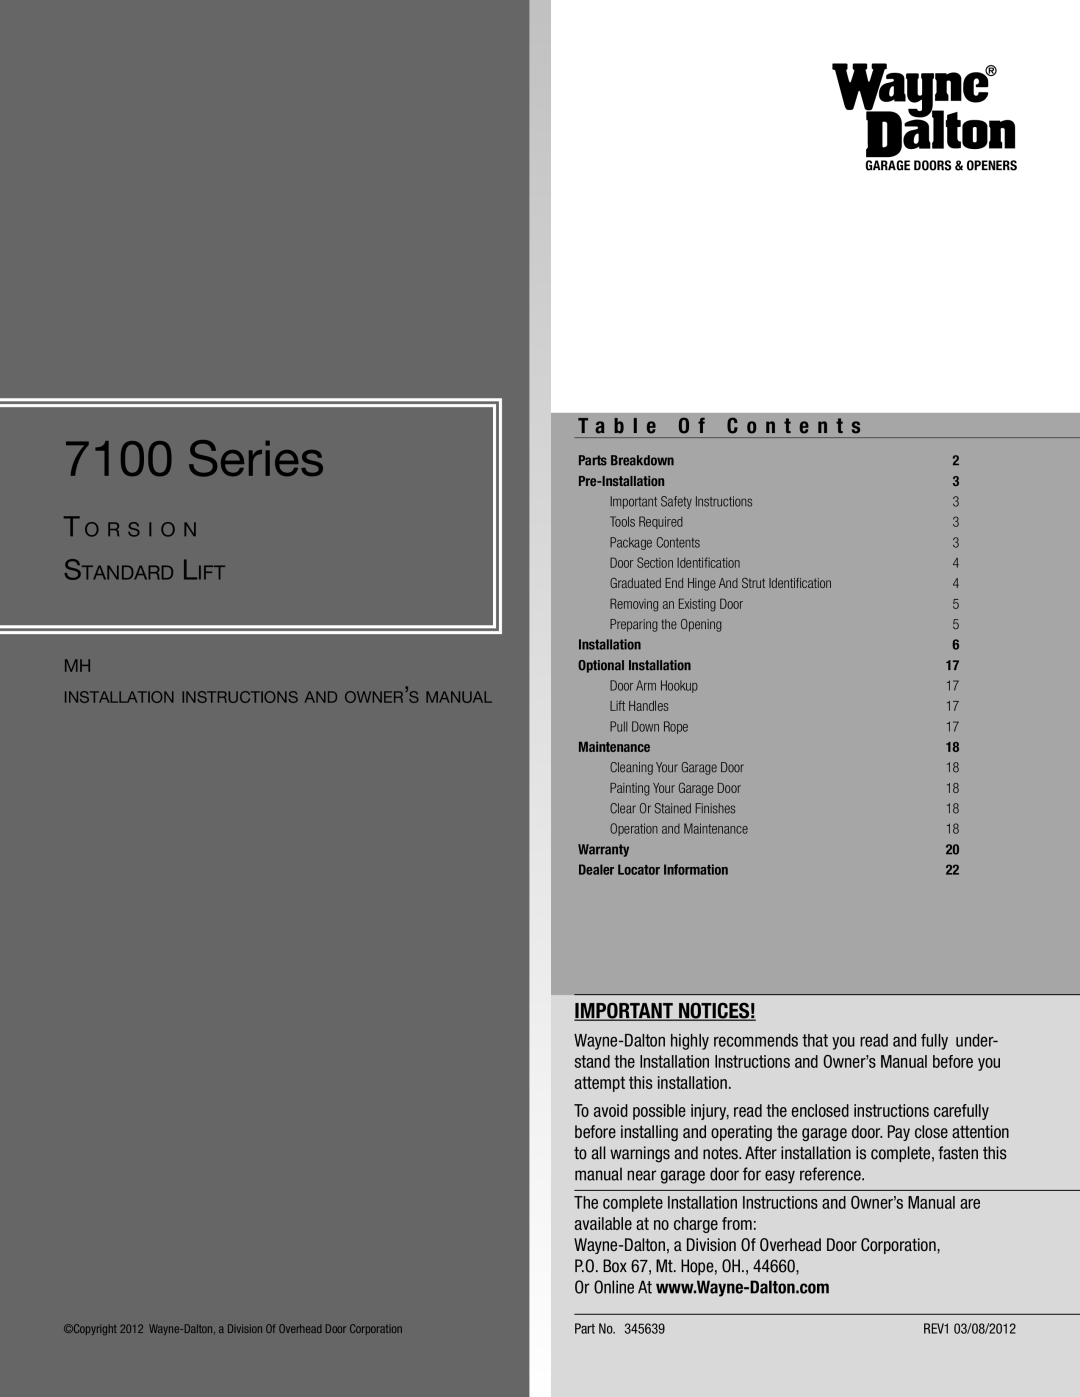 Wayne-Dalton 7100 Series installation instructions T a b l e O f C o n t e n t s, Important Notices 